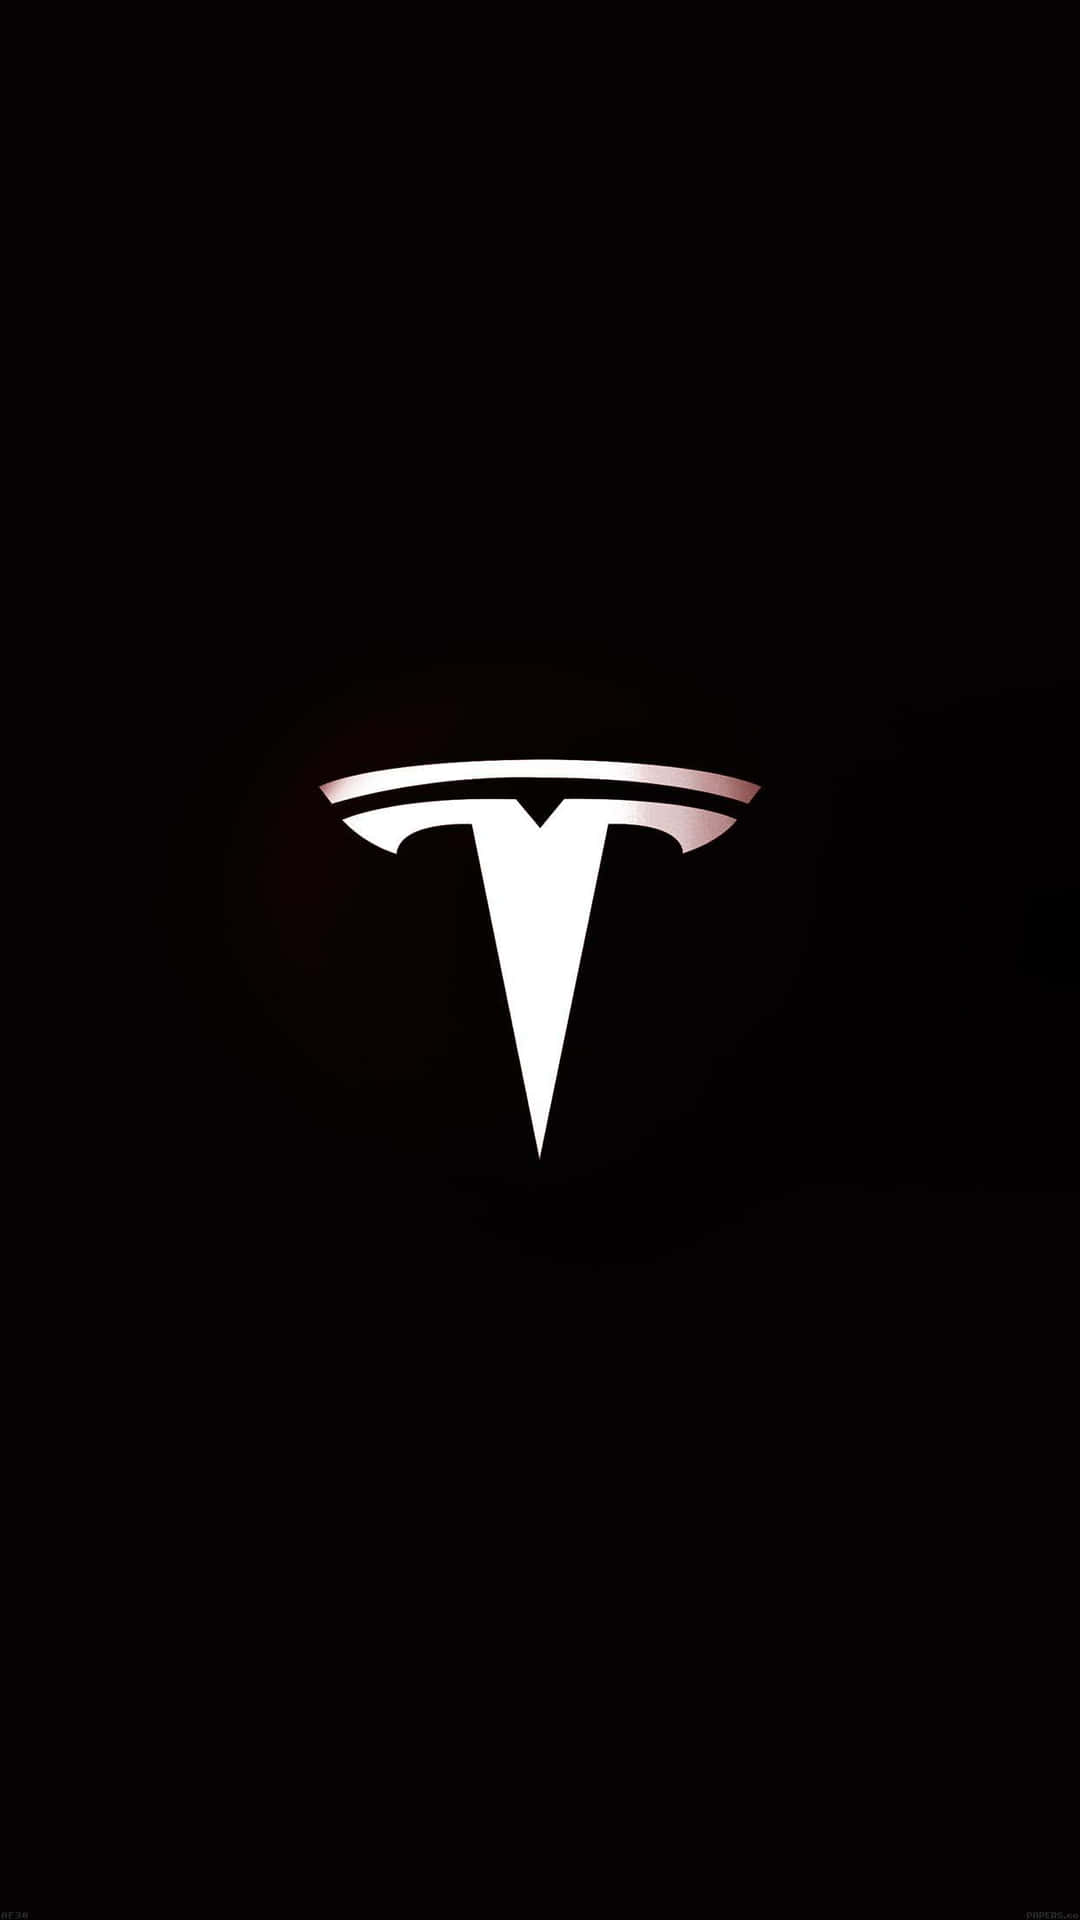 Teslalogo In 4k Auflösung Wallpaper